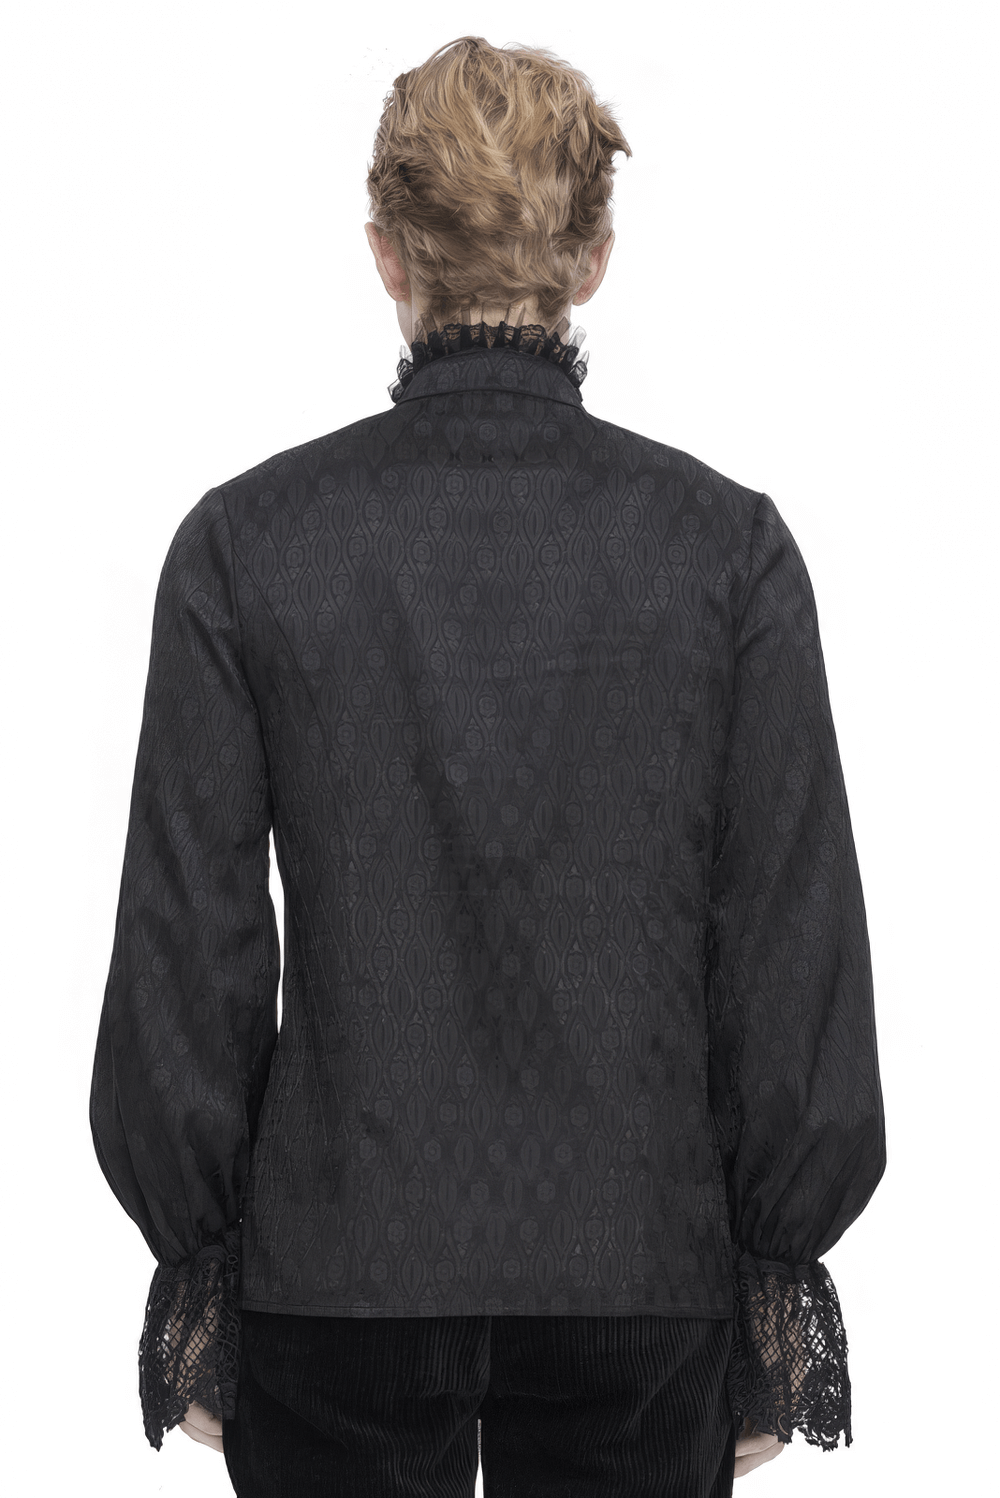 Elegant Victorian Lace-Trimmed High-Collar Black Shirt